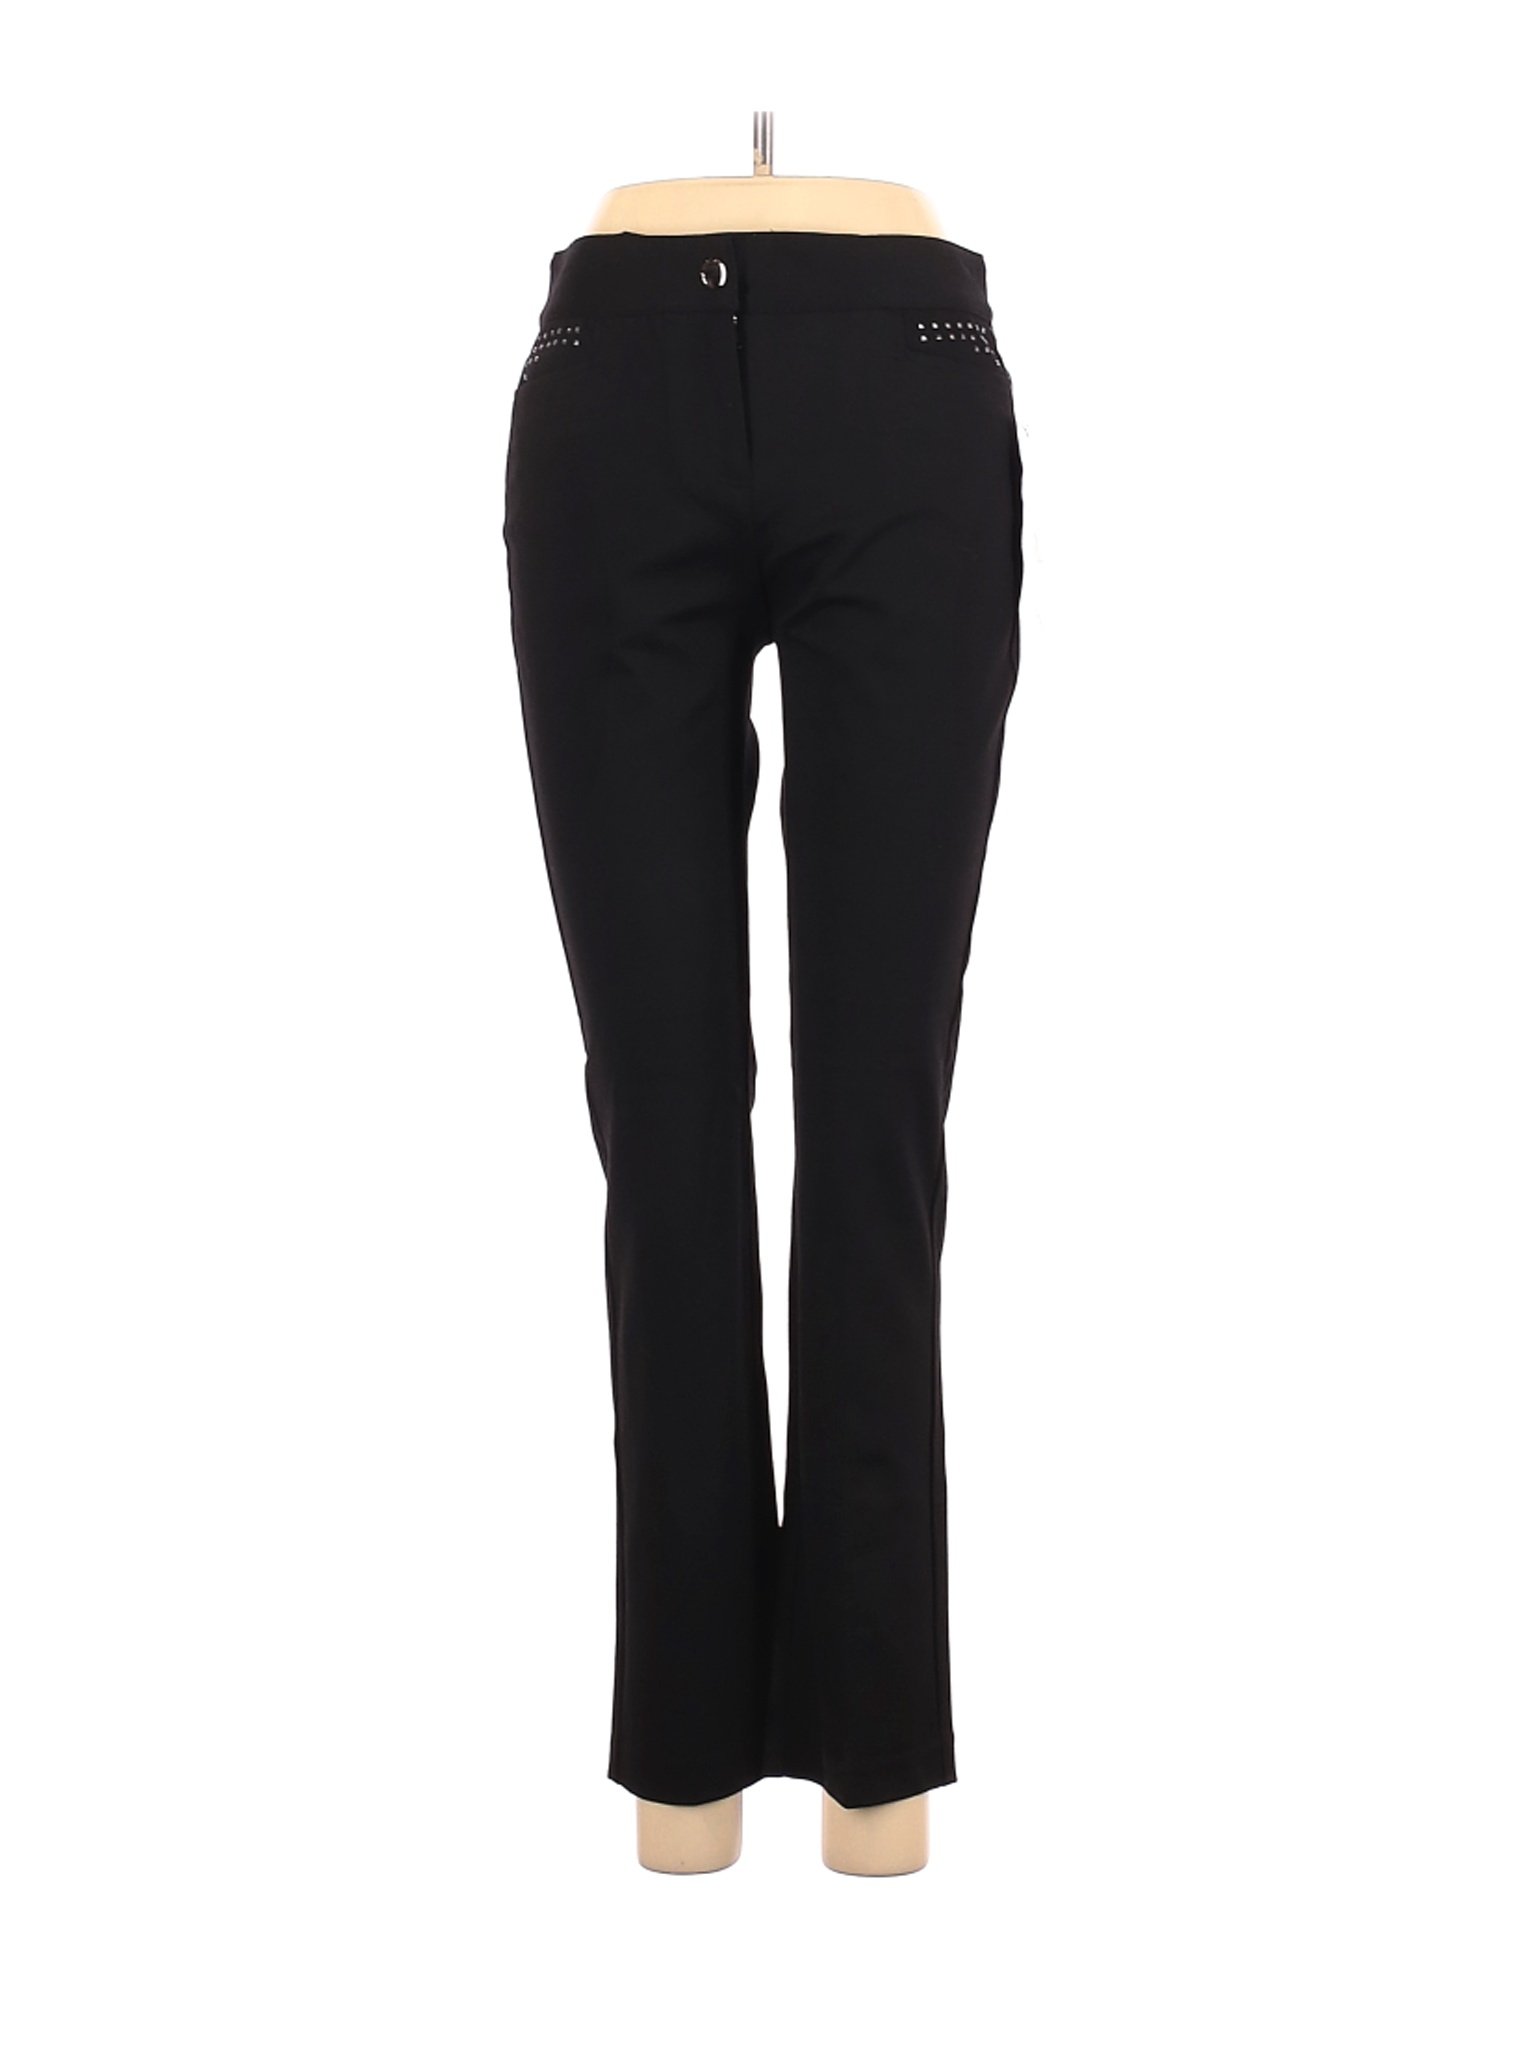 NWT Alfani Women Black Casual Pants 4 Petites | eBay